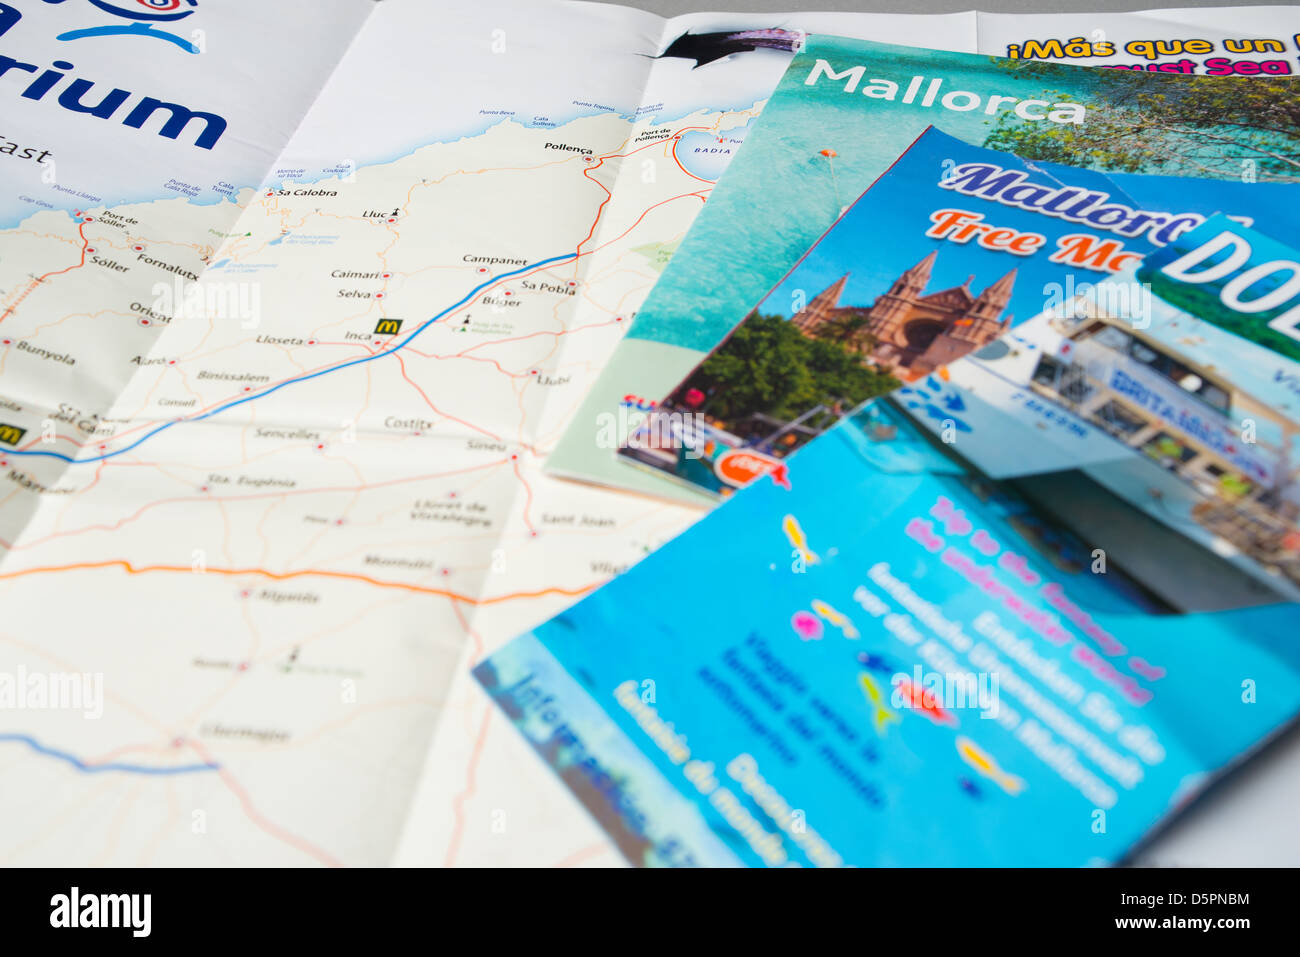 historisch Vrijgekomen erosie Mallorca travel brochures and map Stock Photo - Alamy